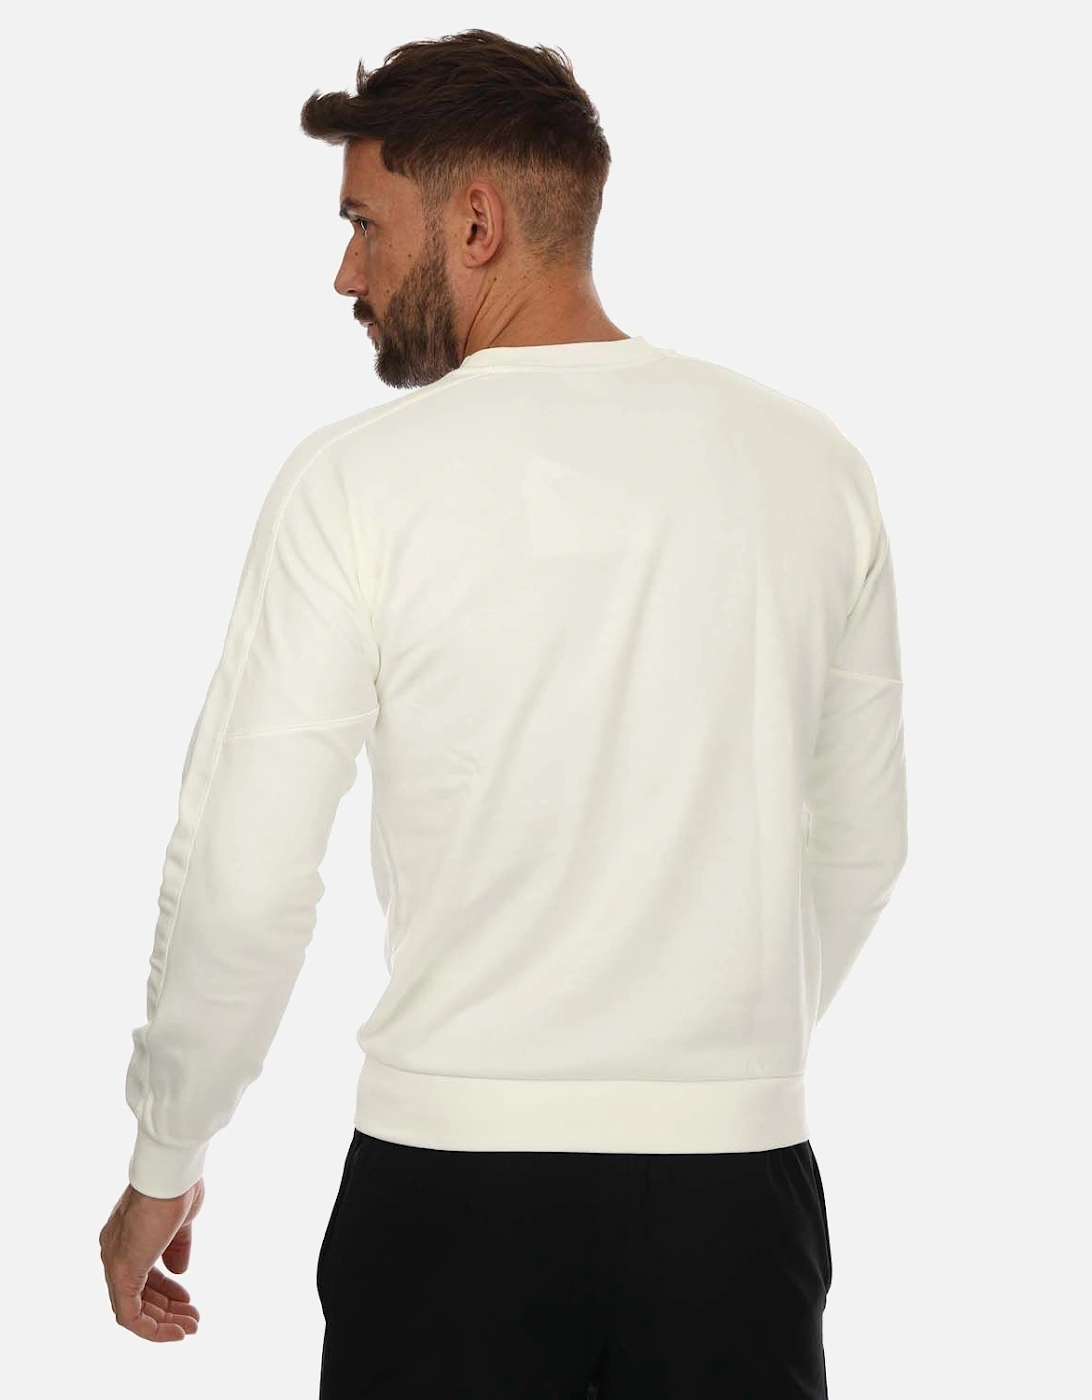 Mens Colourblock Design Sweatshirt - Mens Cotton Fleece Sweatshirt